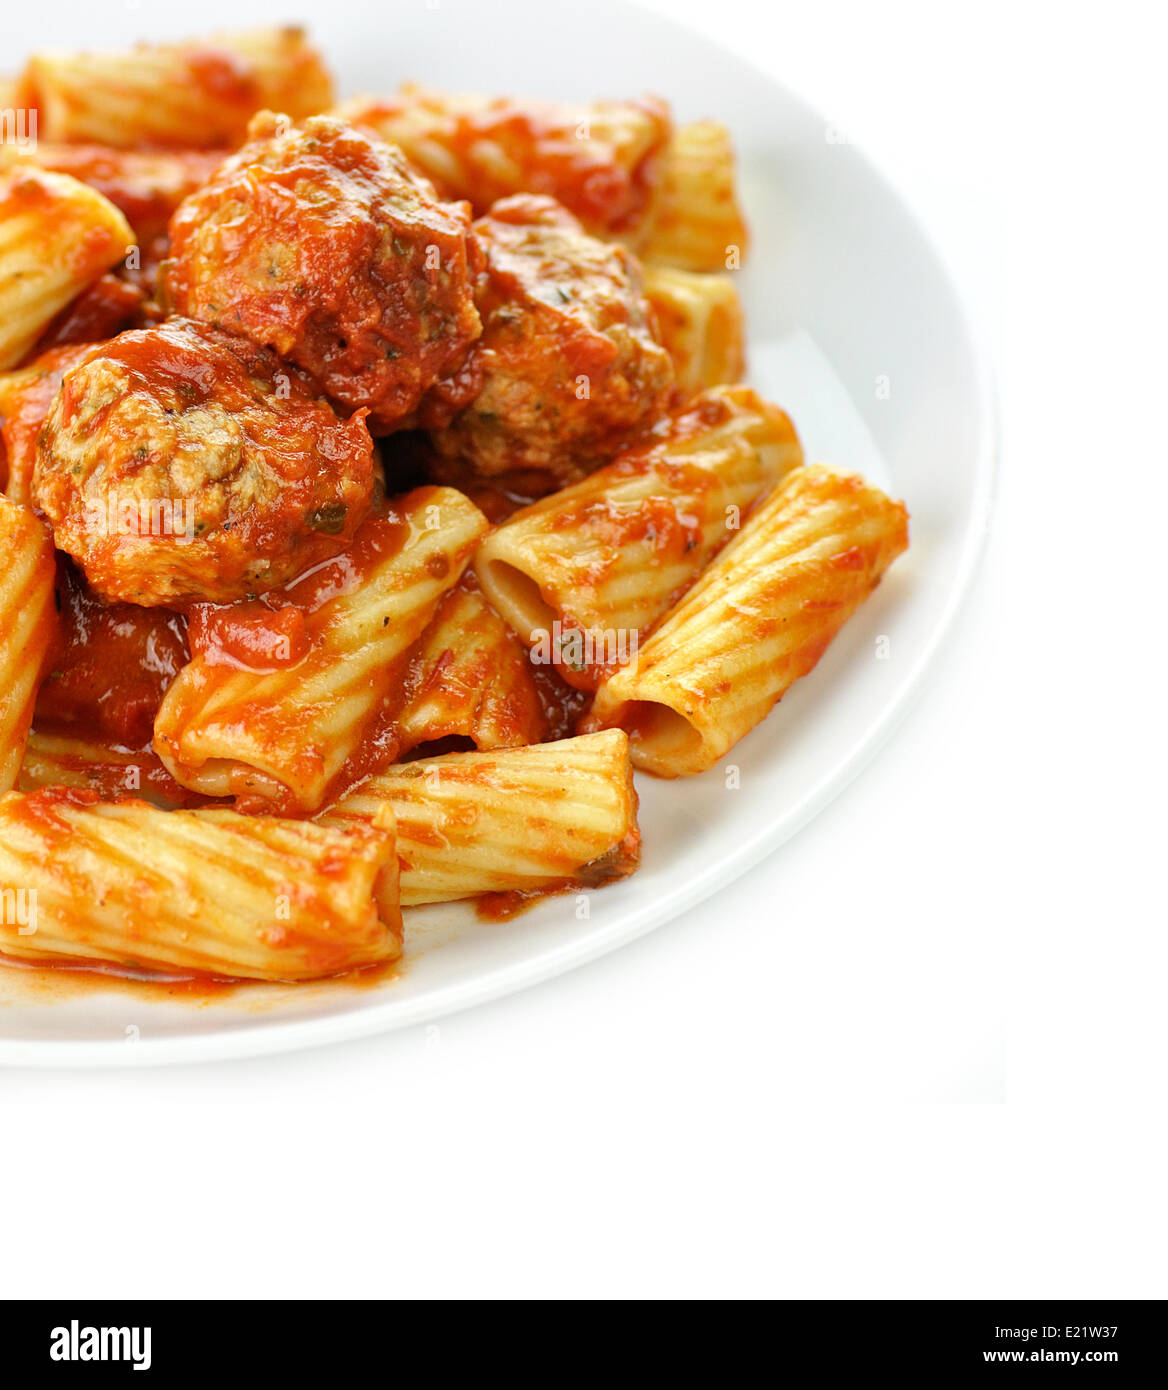 Rigatoni with tomato sauce and meatballs. Stock Photo